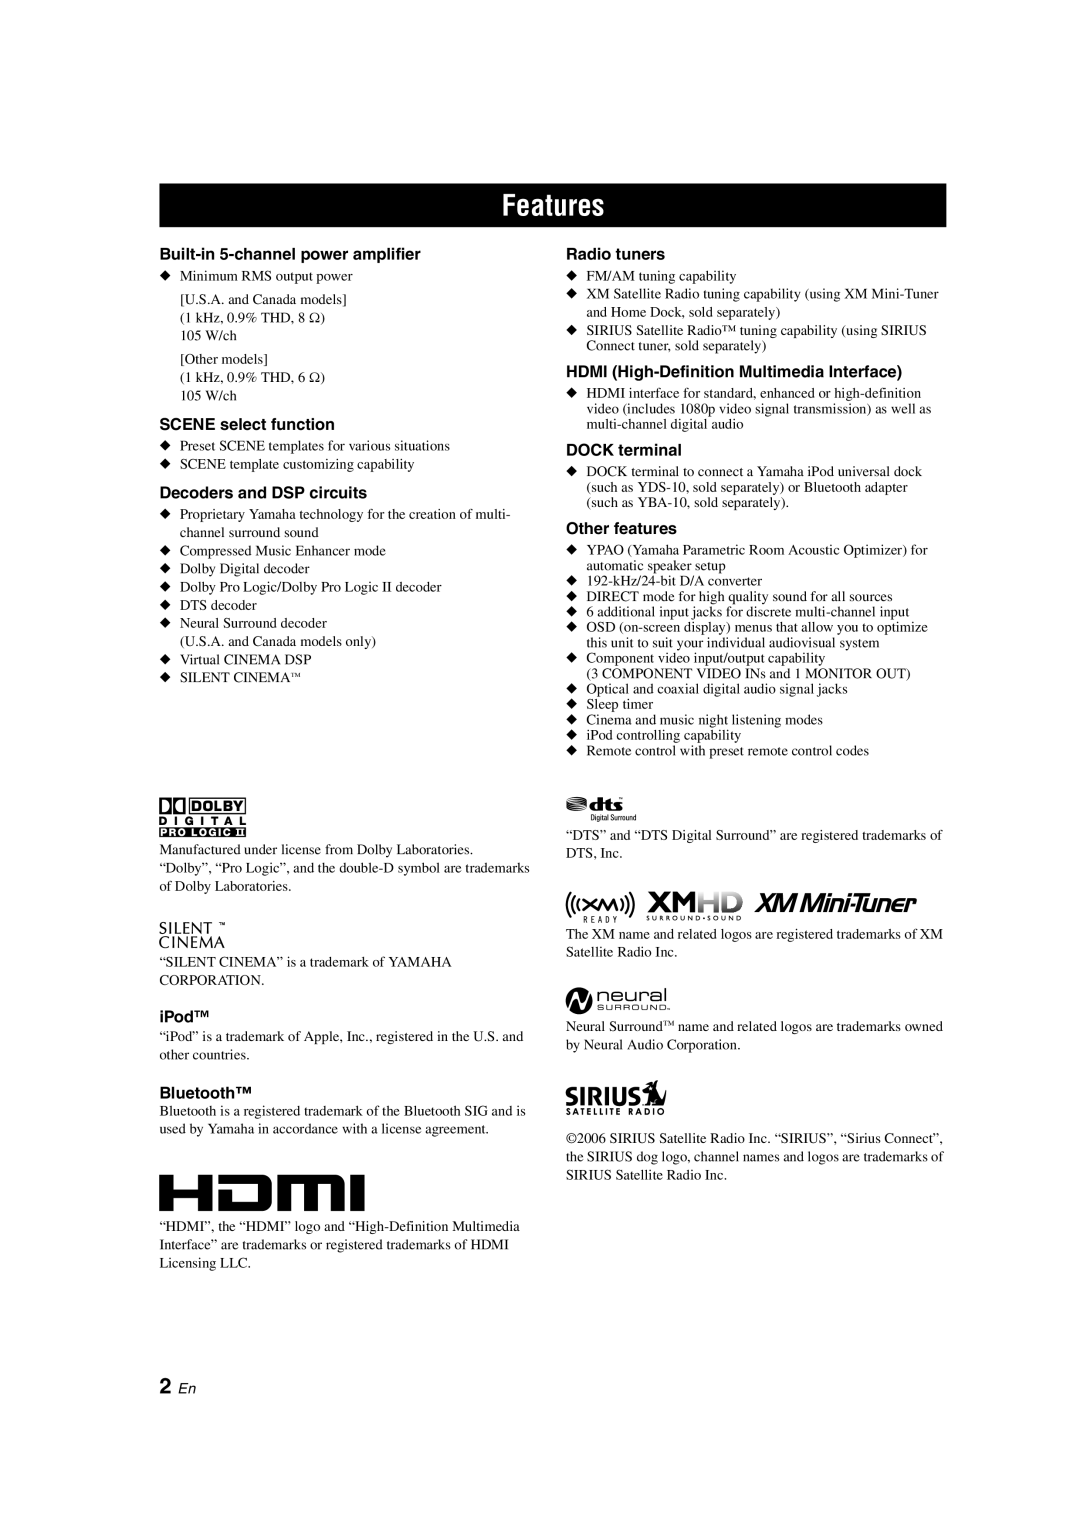 Yamaha RX-V463 owner manual Features, 2 En 